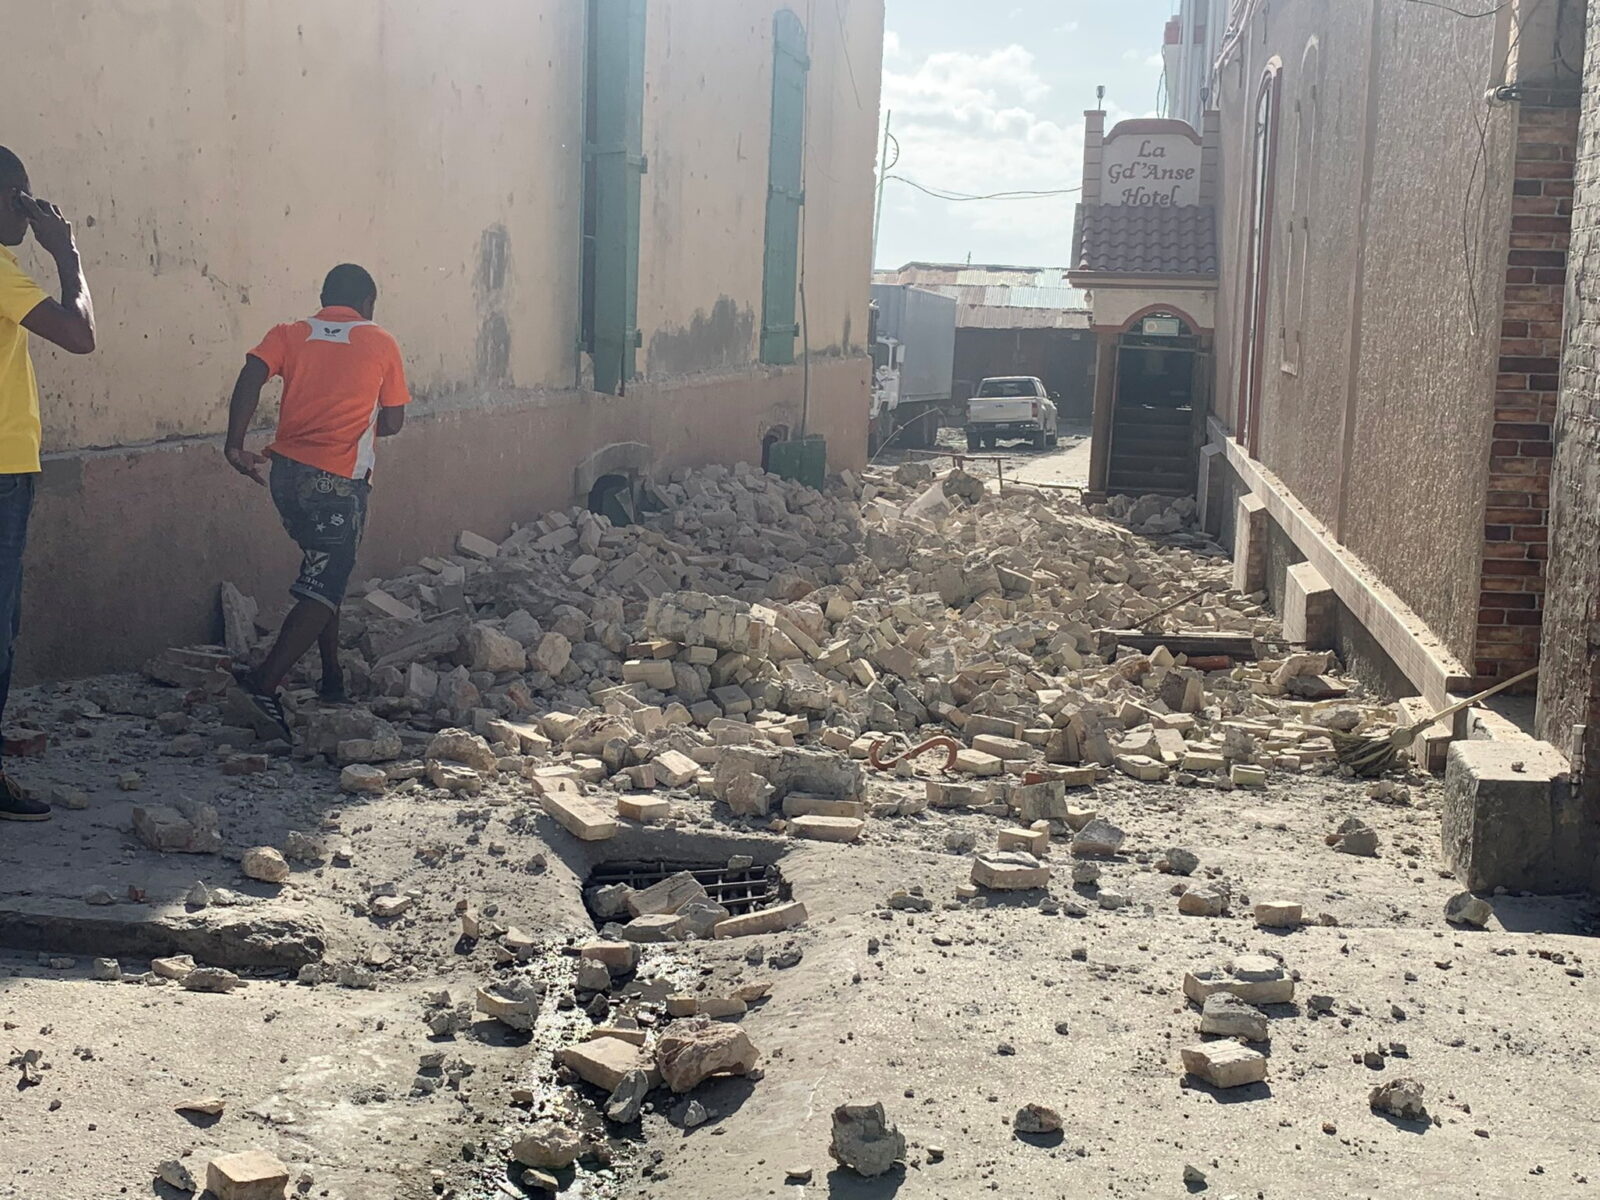 Damage is seen in an area after a major earthquake struck southwestern Haiti, in Jeremie